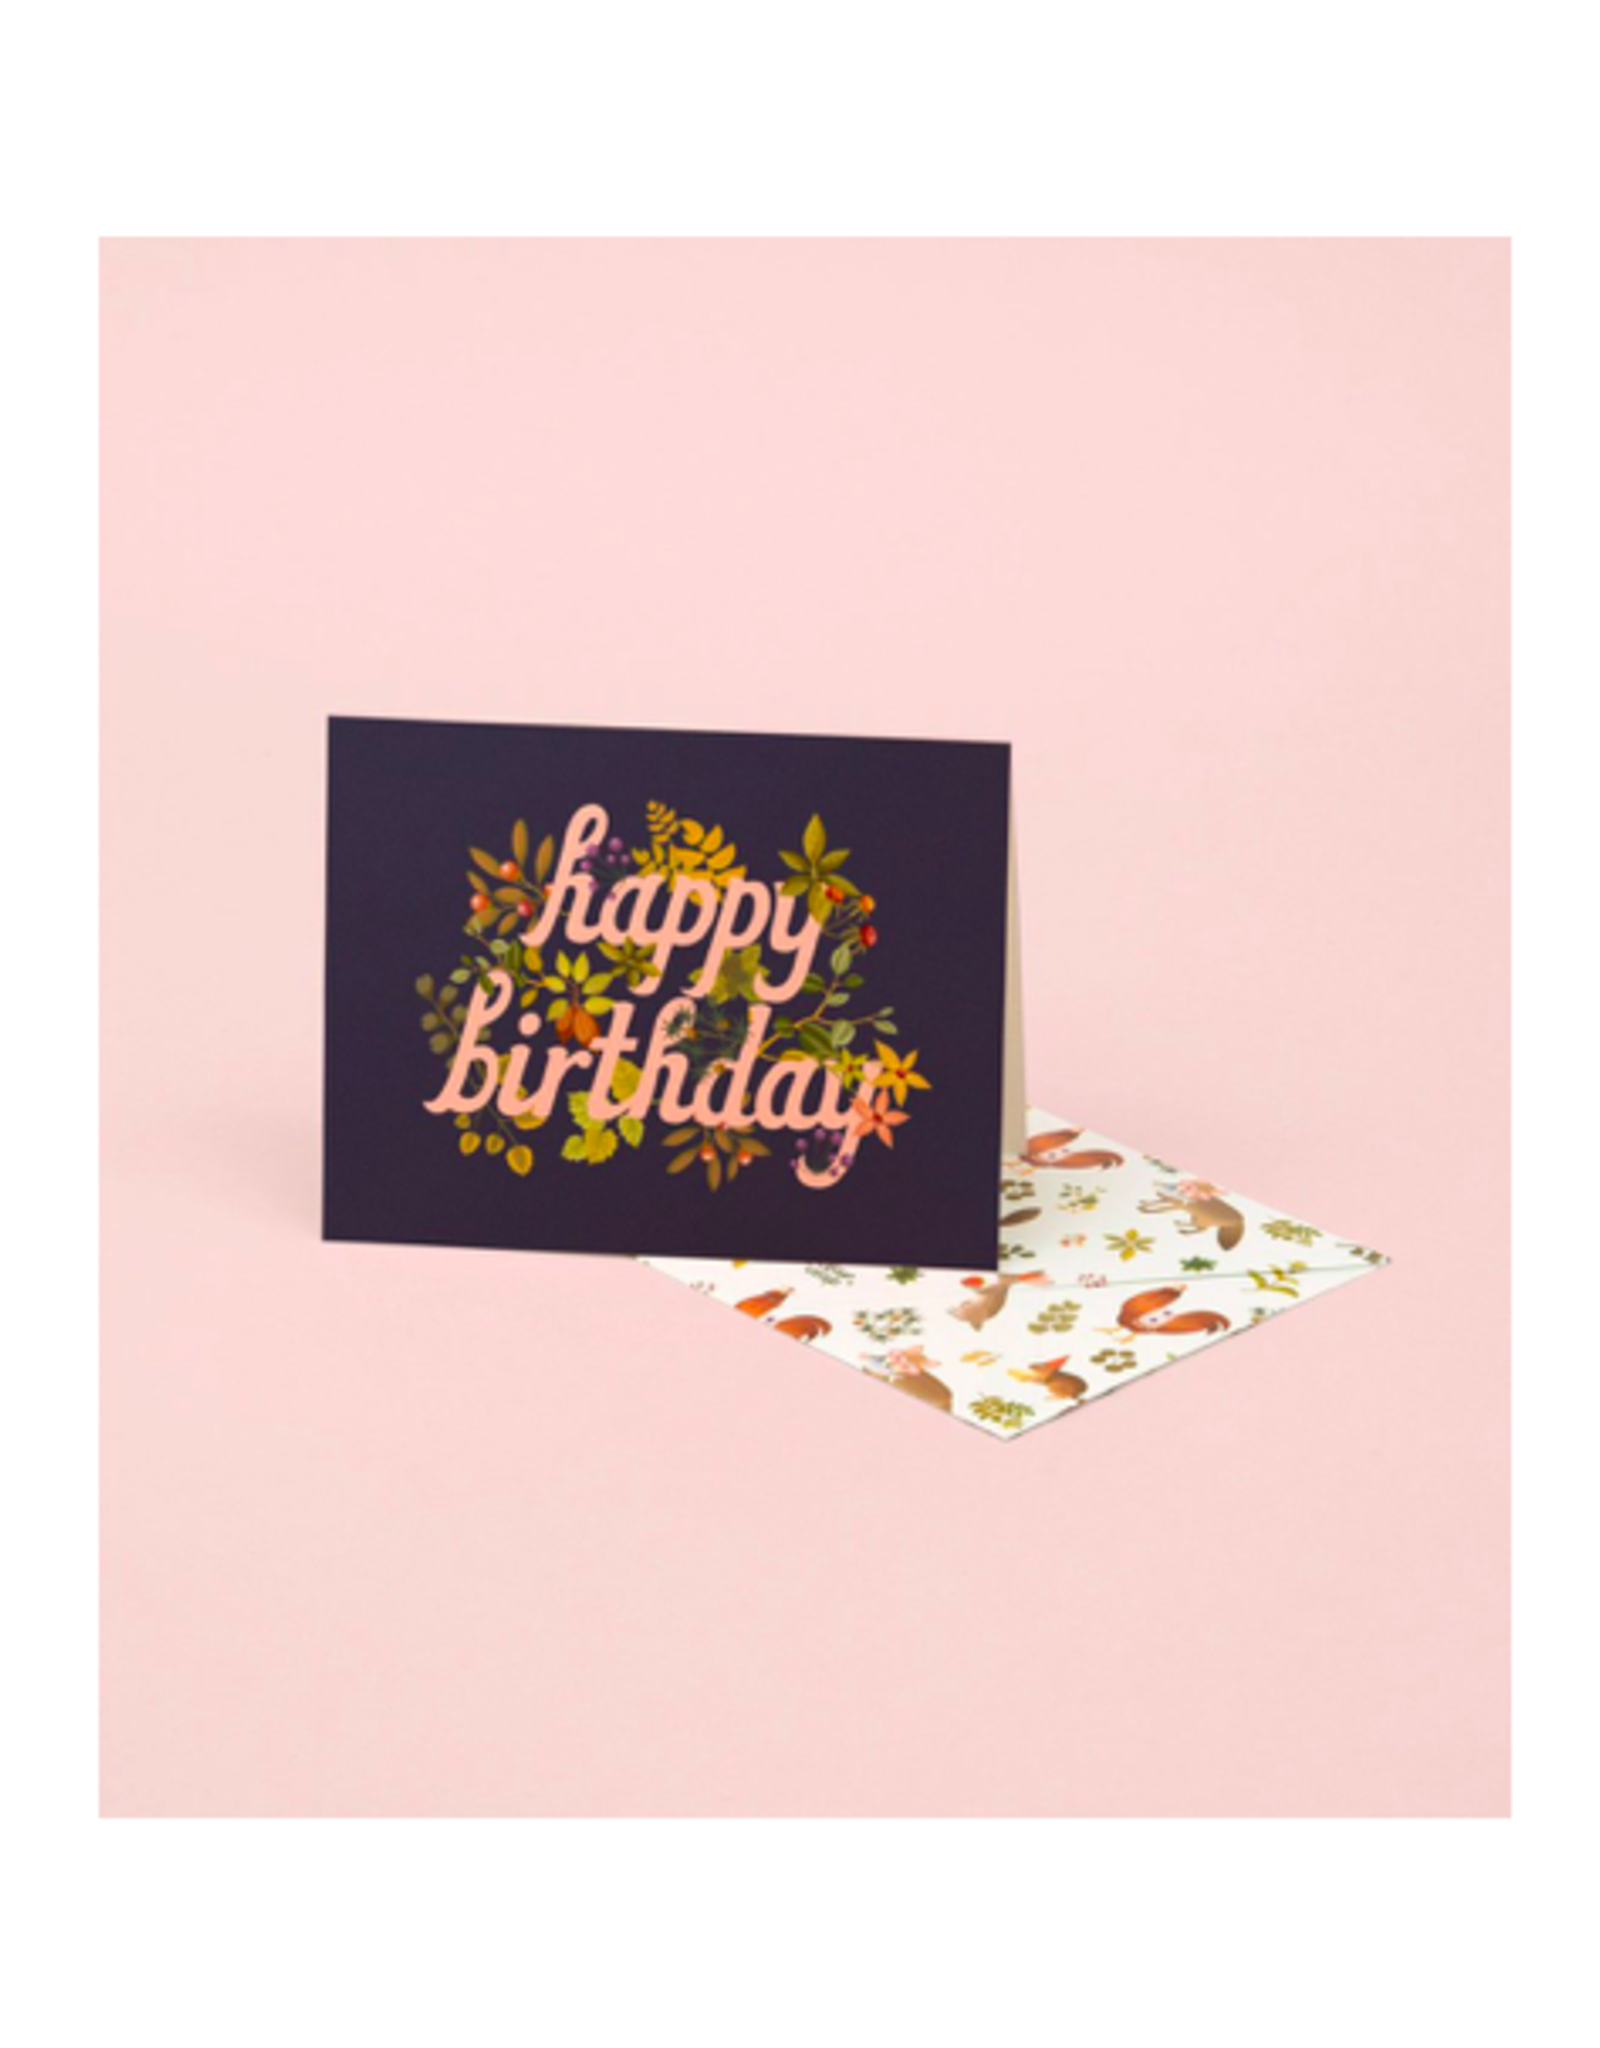 CAP - Card / Happy Birthday, 4.25 x 5.5"